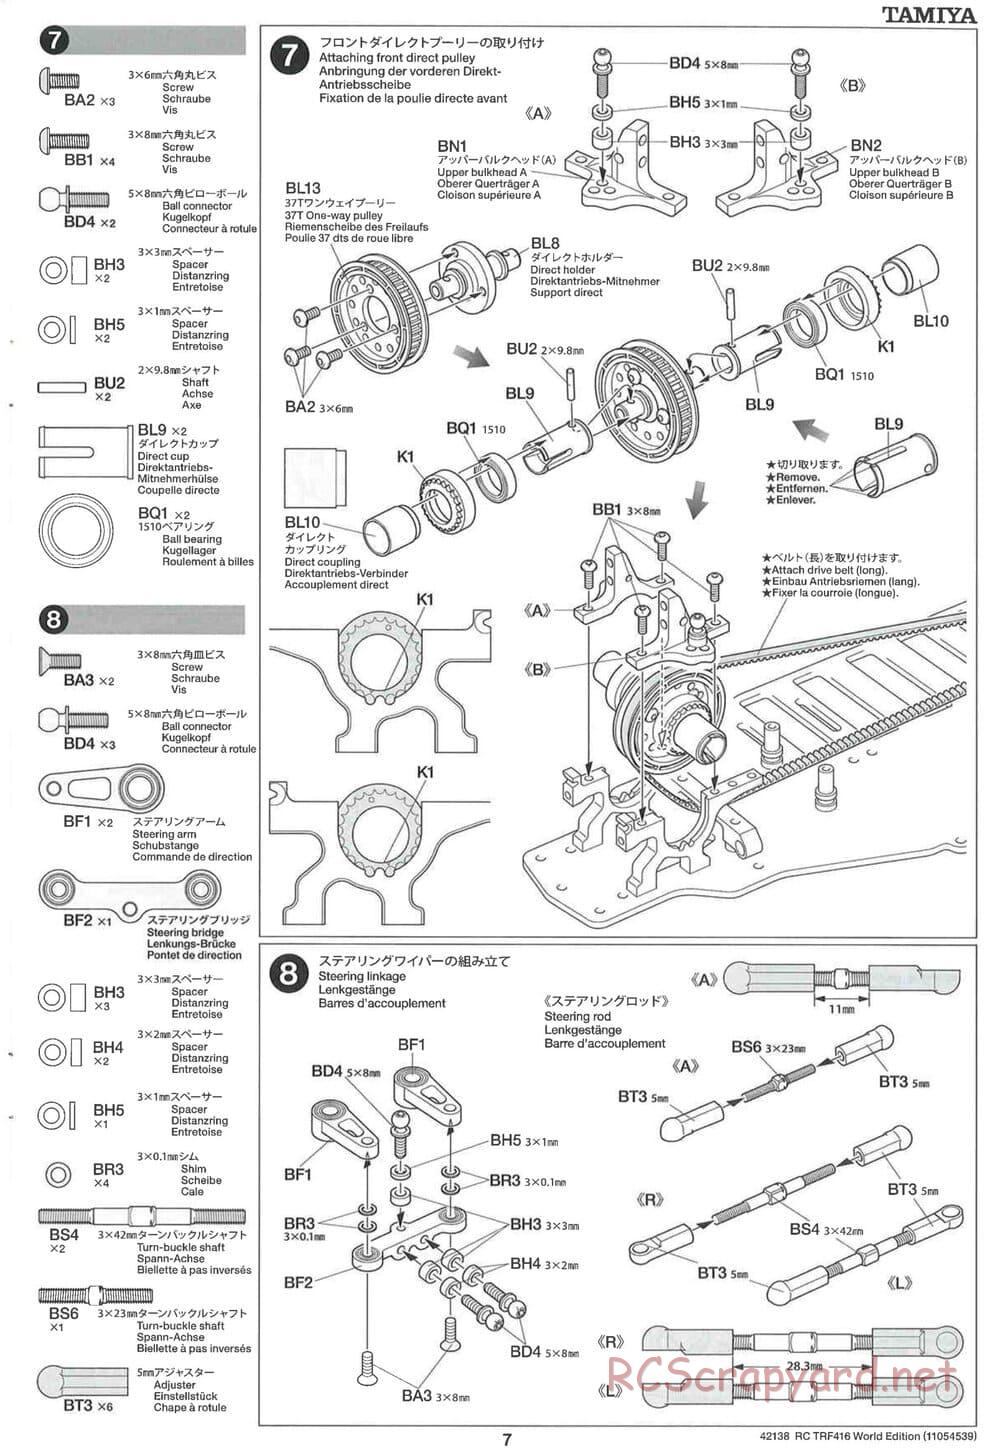 Tamiya - TRF416 World Edition Chassis - Manual - Page 7